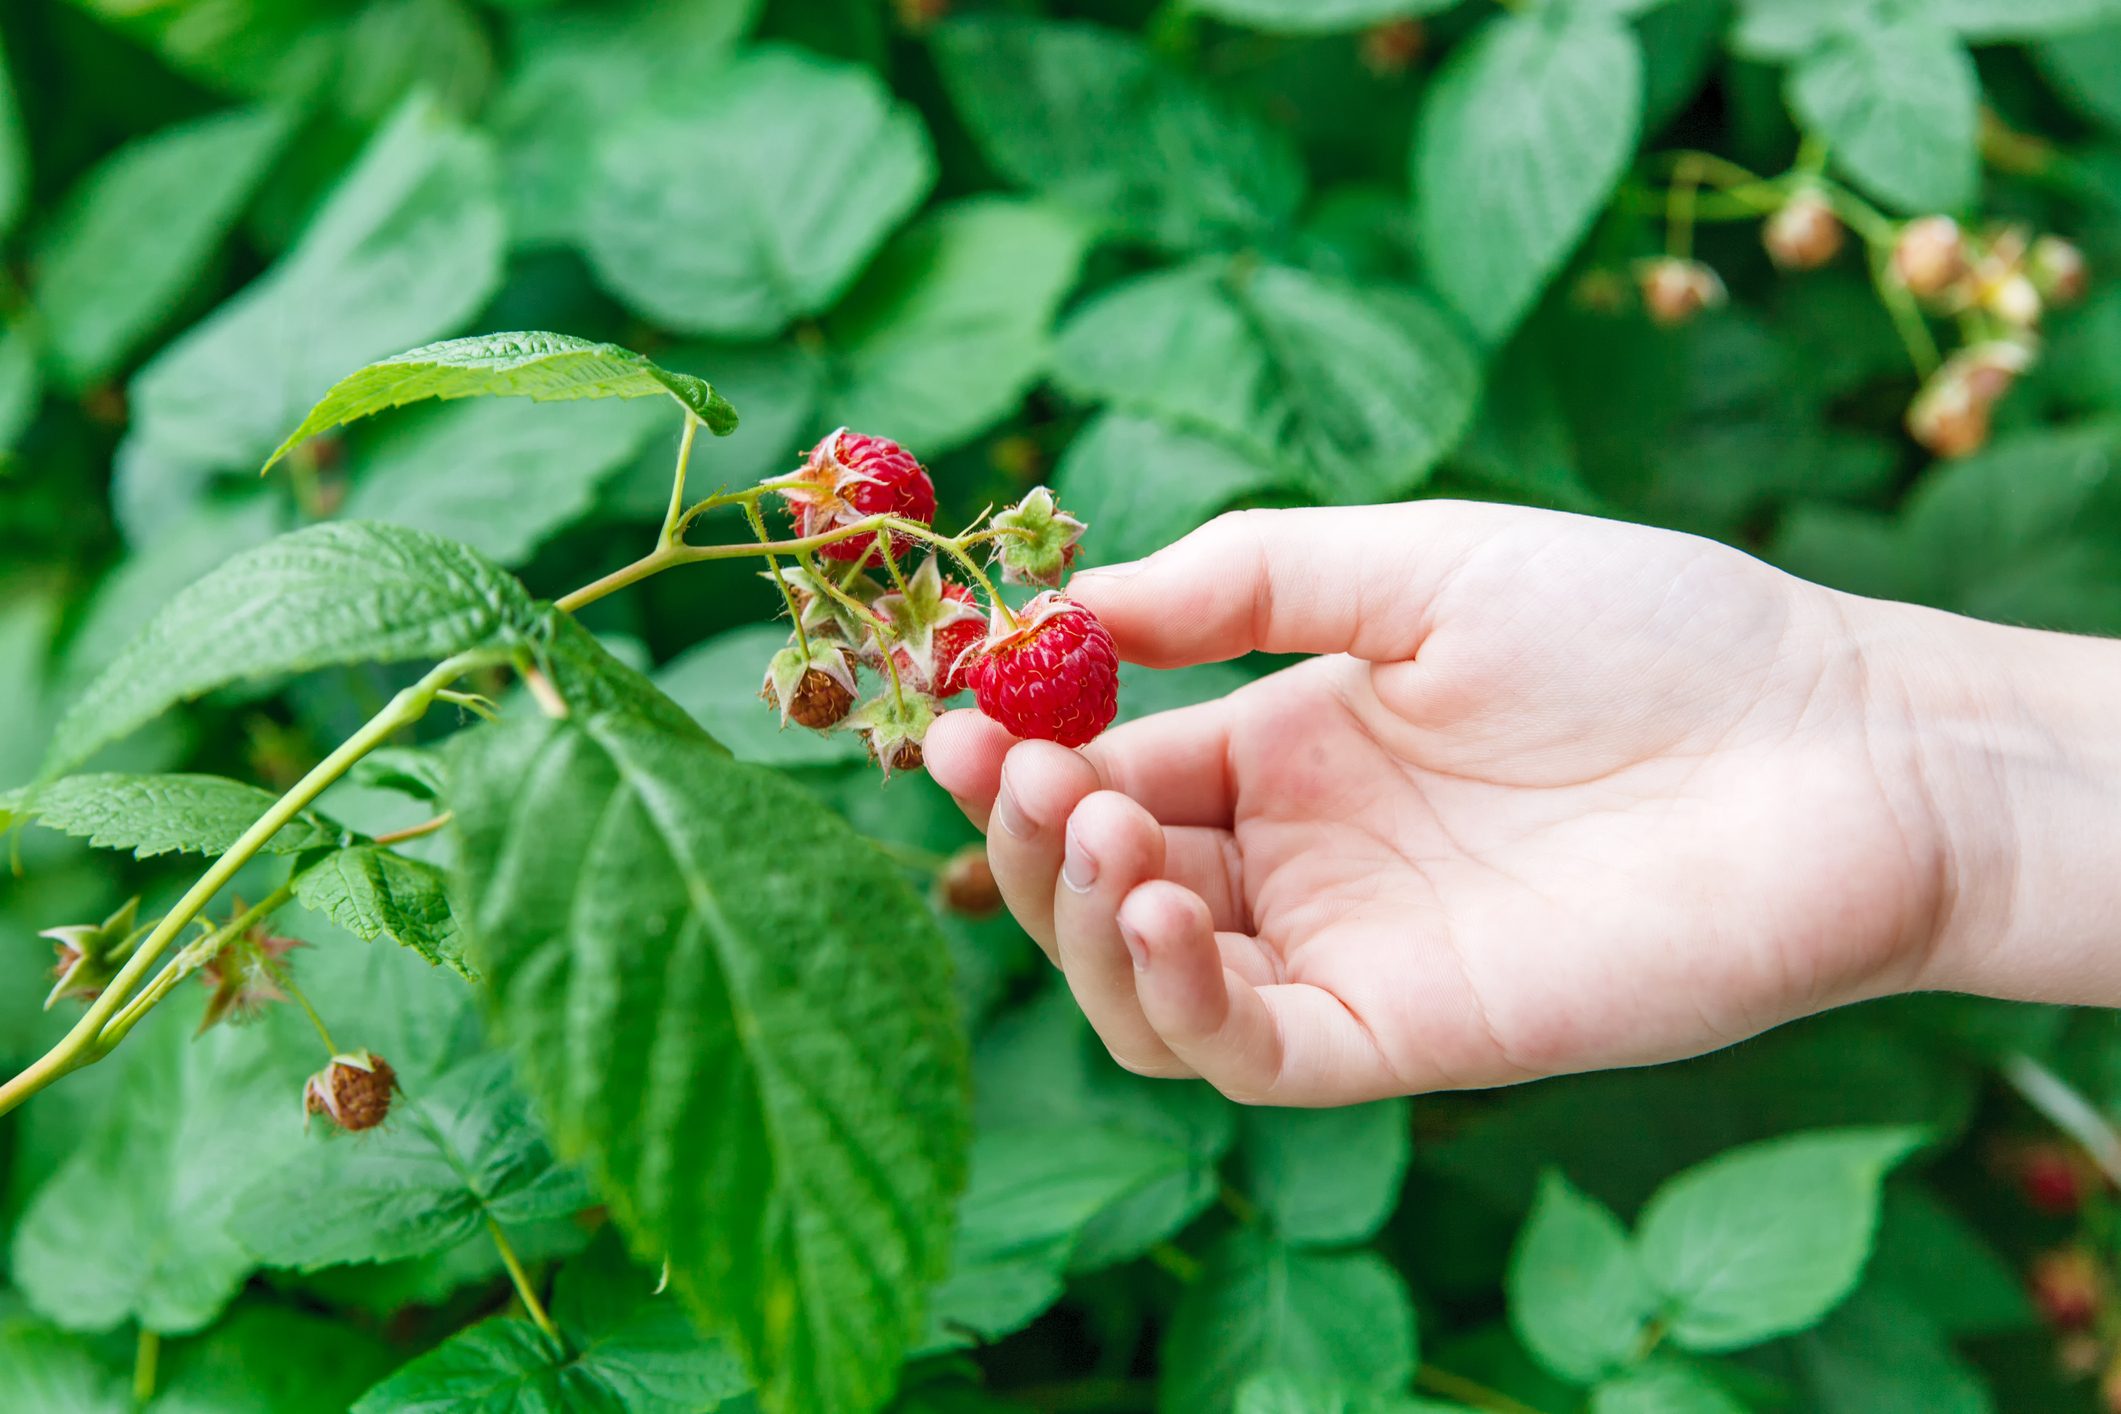 Raspberry picking tips